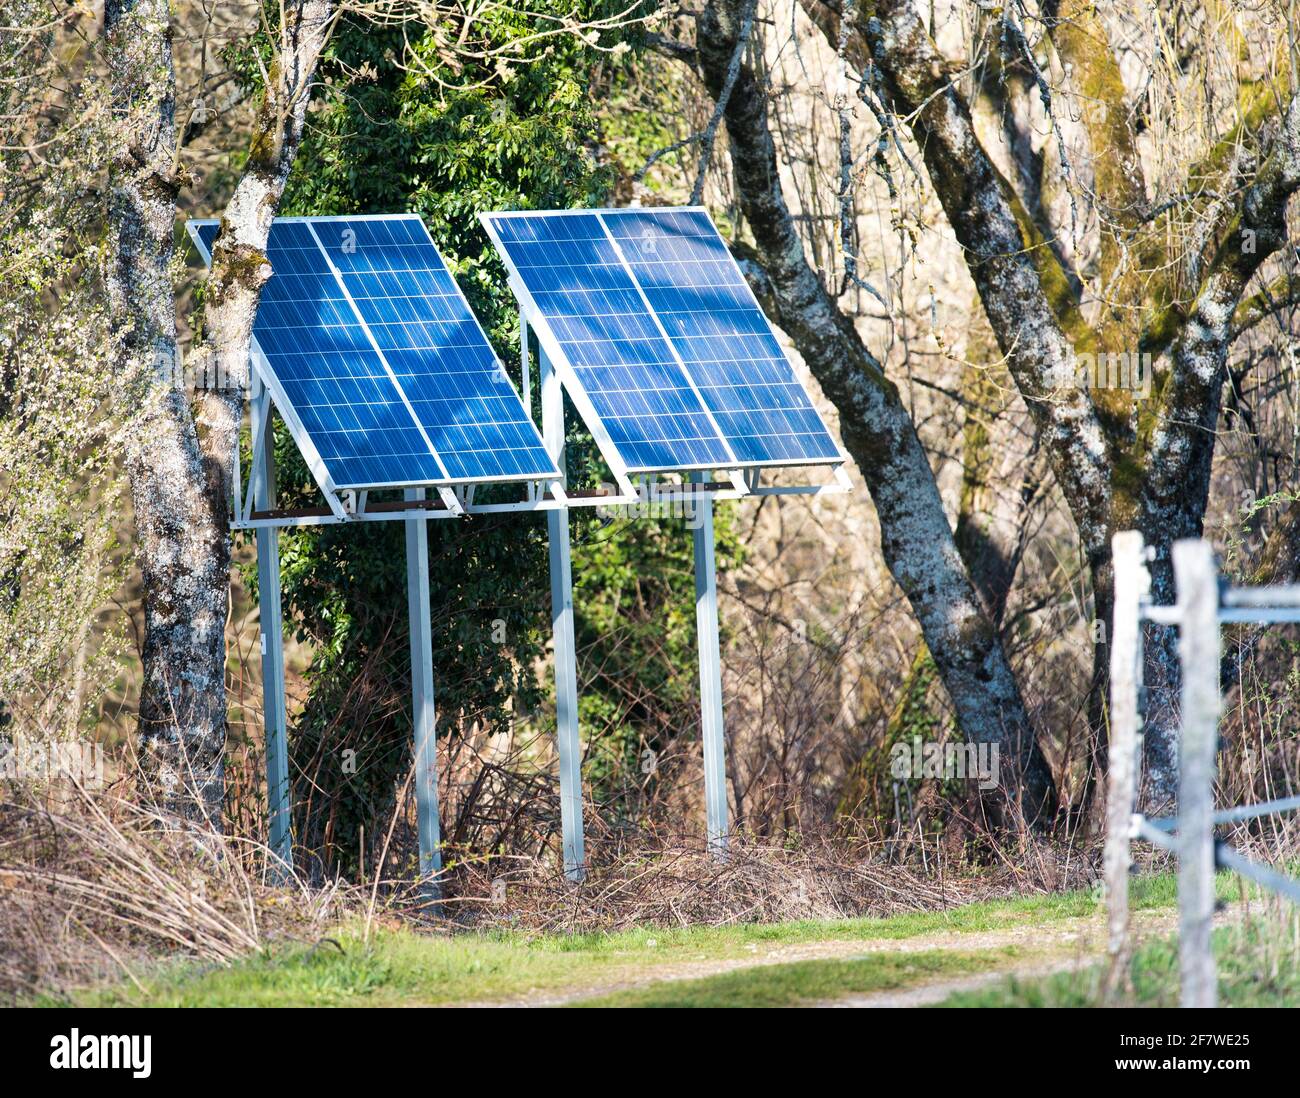 Solar panels, photovoltaic - alternative electricity source . Stock Photo